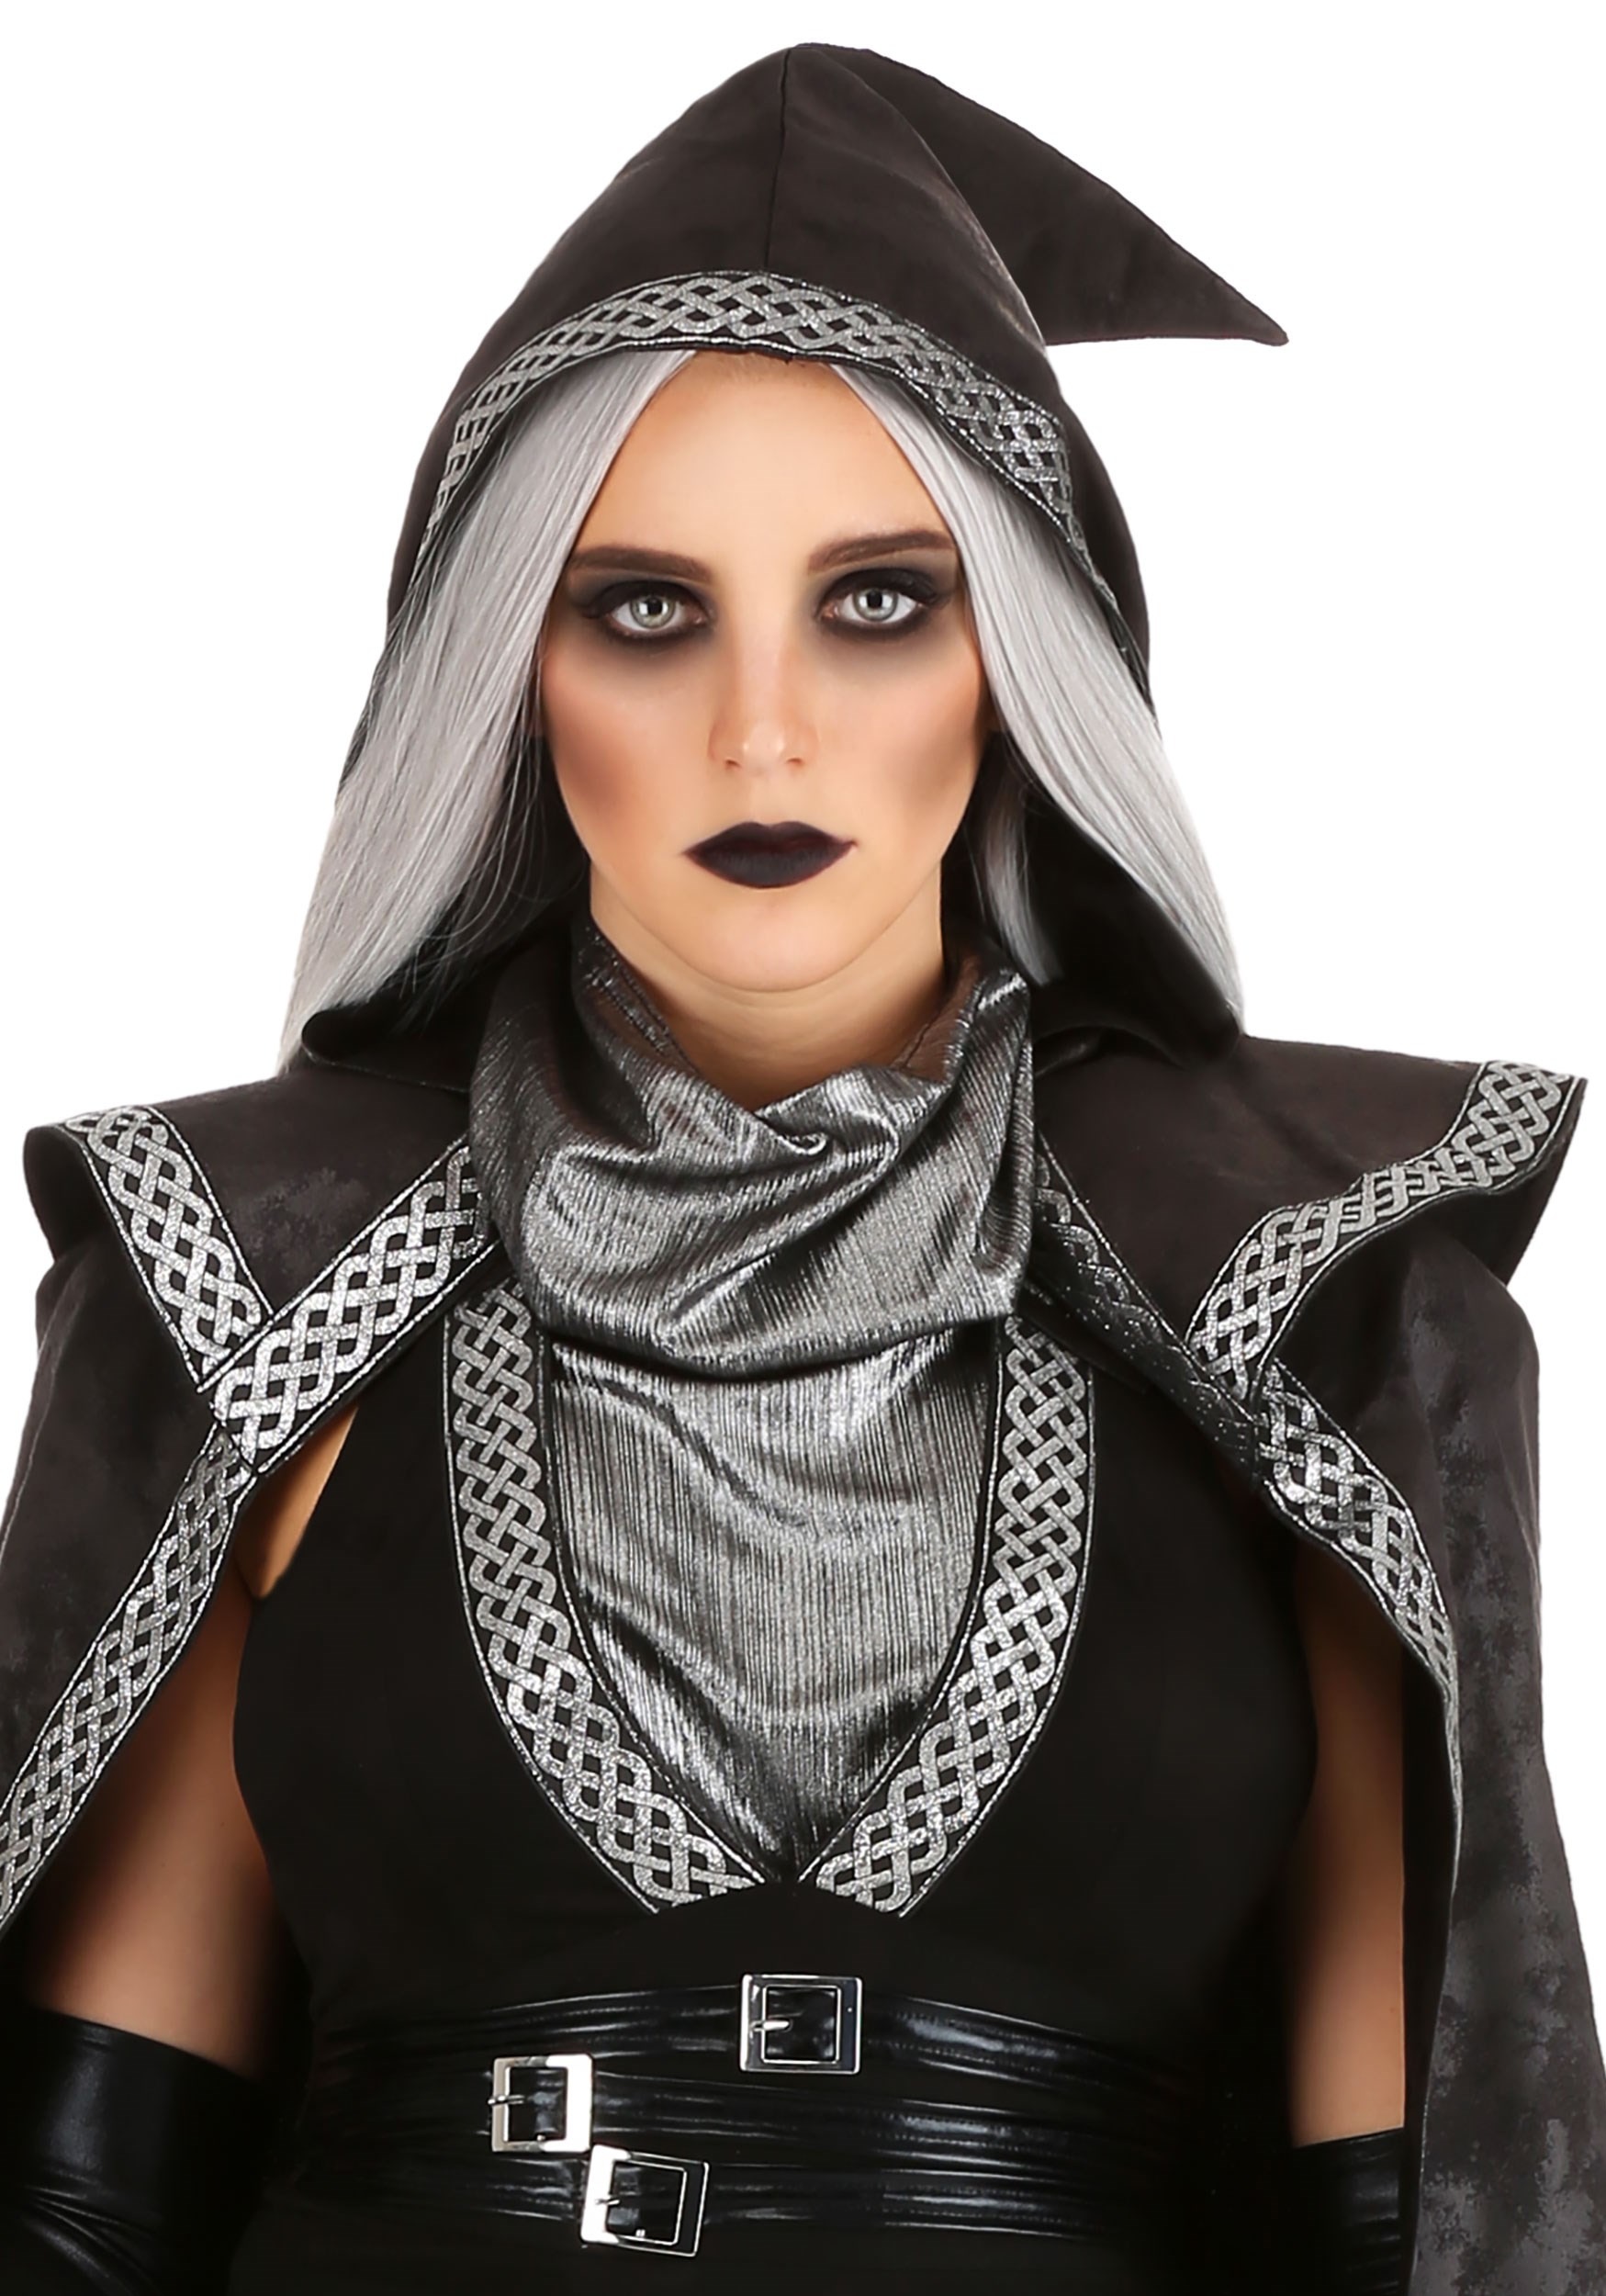 Enchanted Warlock Woman's Costume , Enchantress Costume